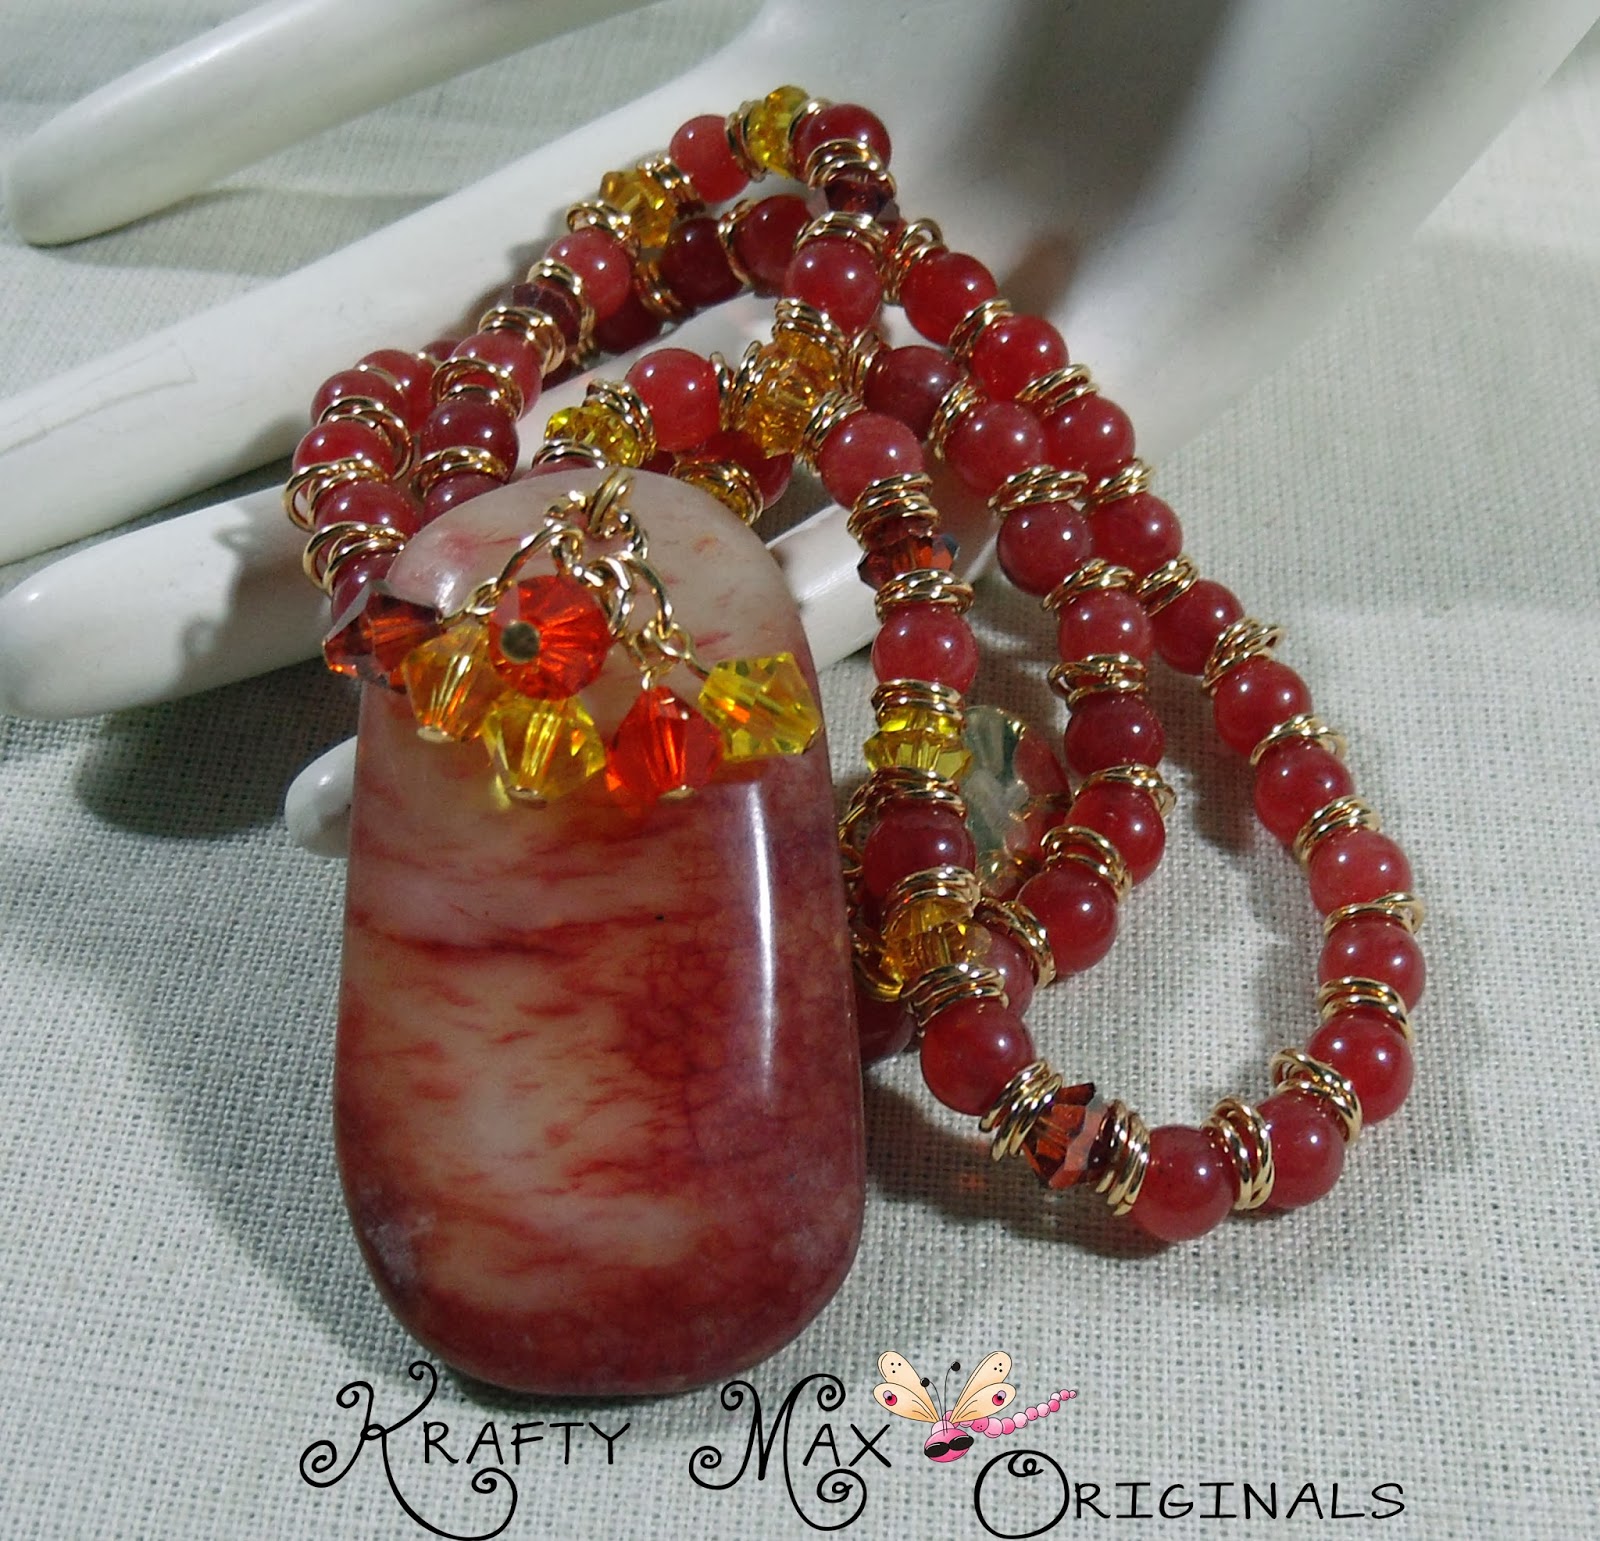 http://www.lajuliet.com/index.php/2013-01-04-15-21-51/ad/gemstone,92/exclusive-bloodstone-and-swarovski-crystal-golden-necklace-set-a-krafty-max-original-design,143